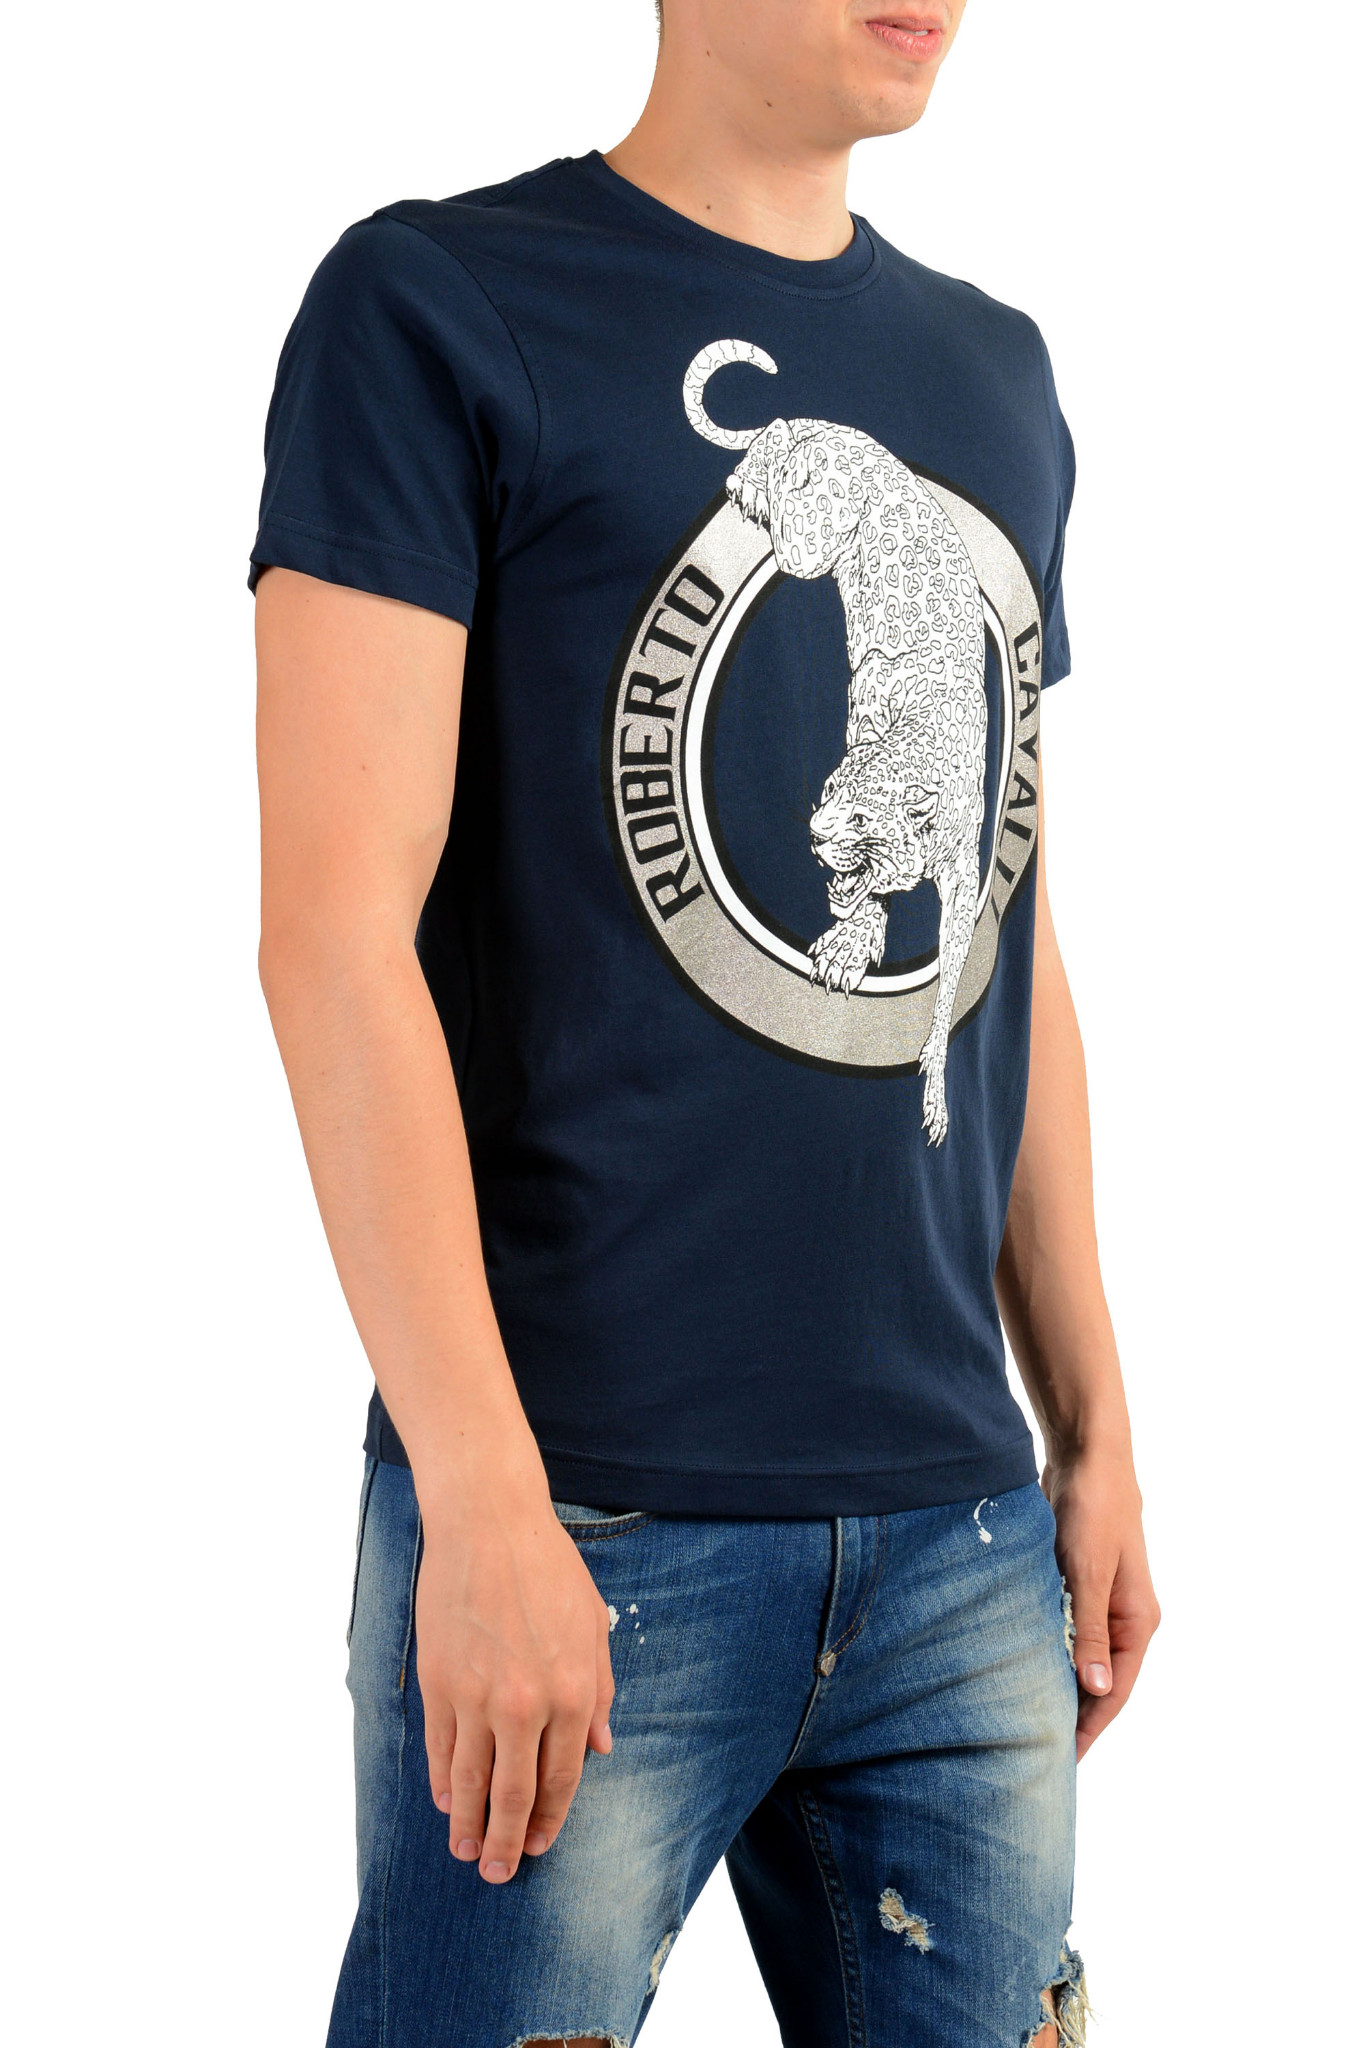 Roberto Cavalli Men's Blue Graphic Print T-Shirt Sz S M L XL 2XL | eBay